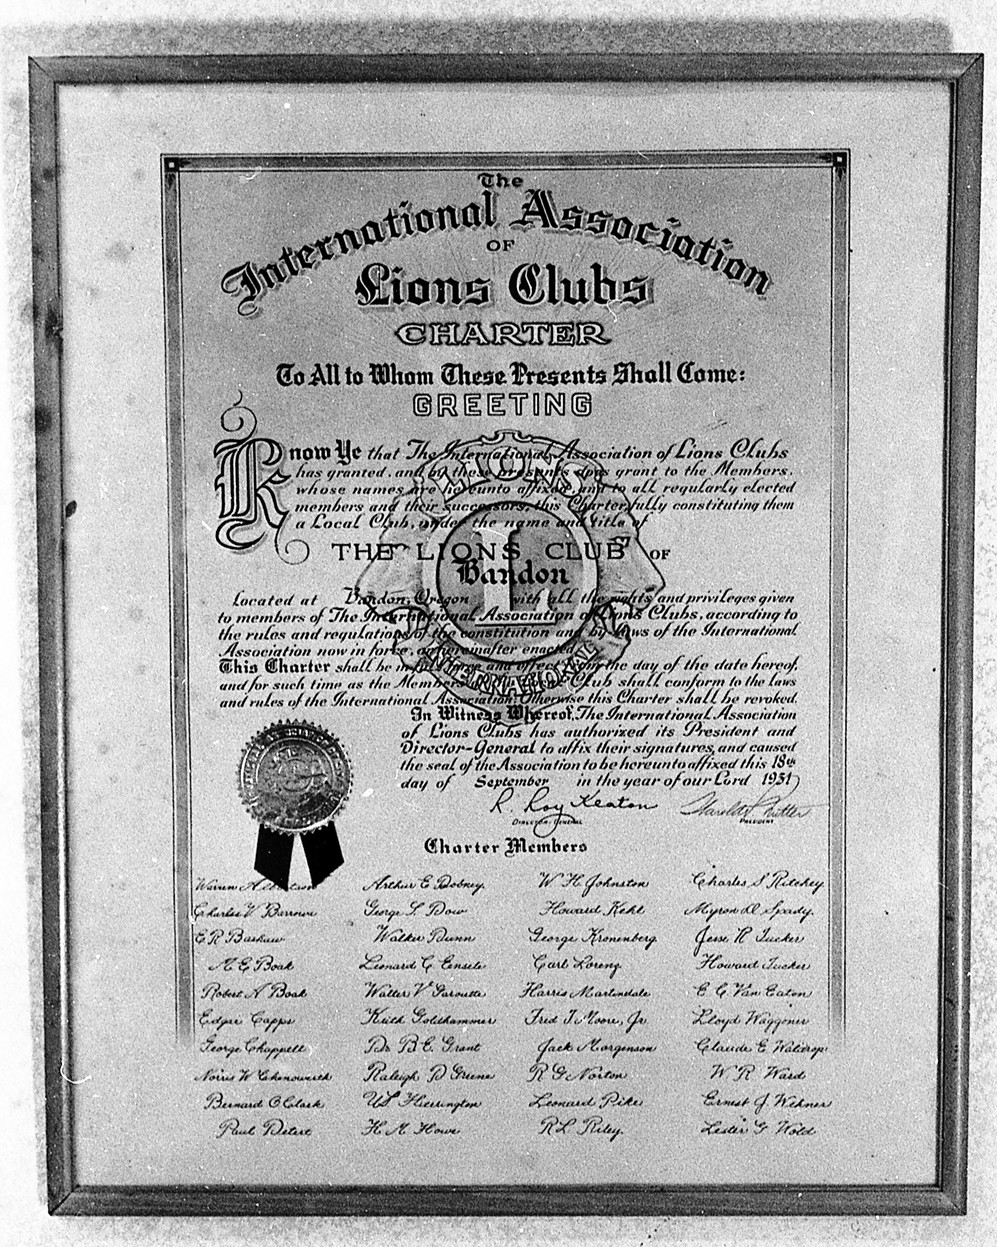 Charter for Bandon Lions Club